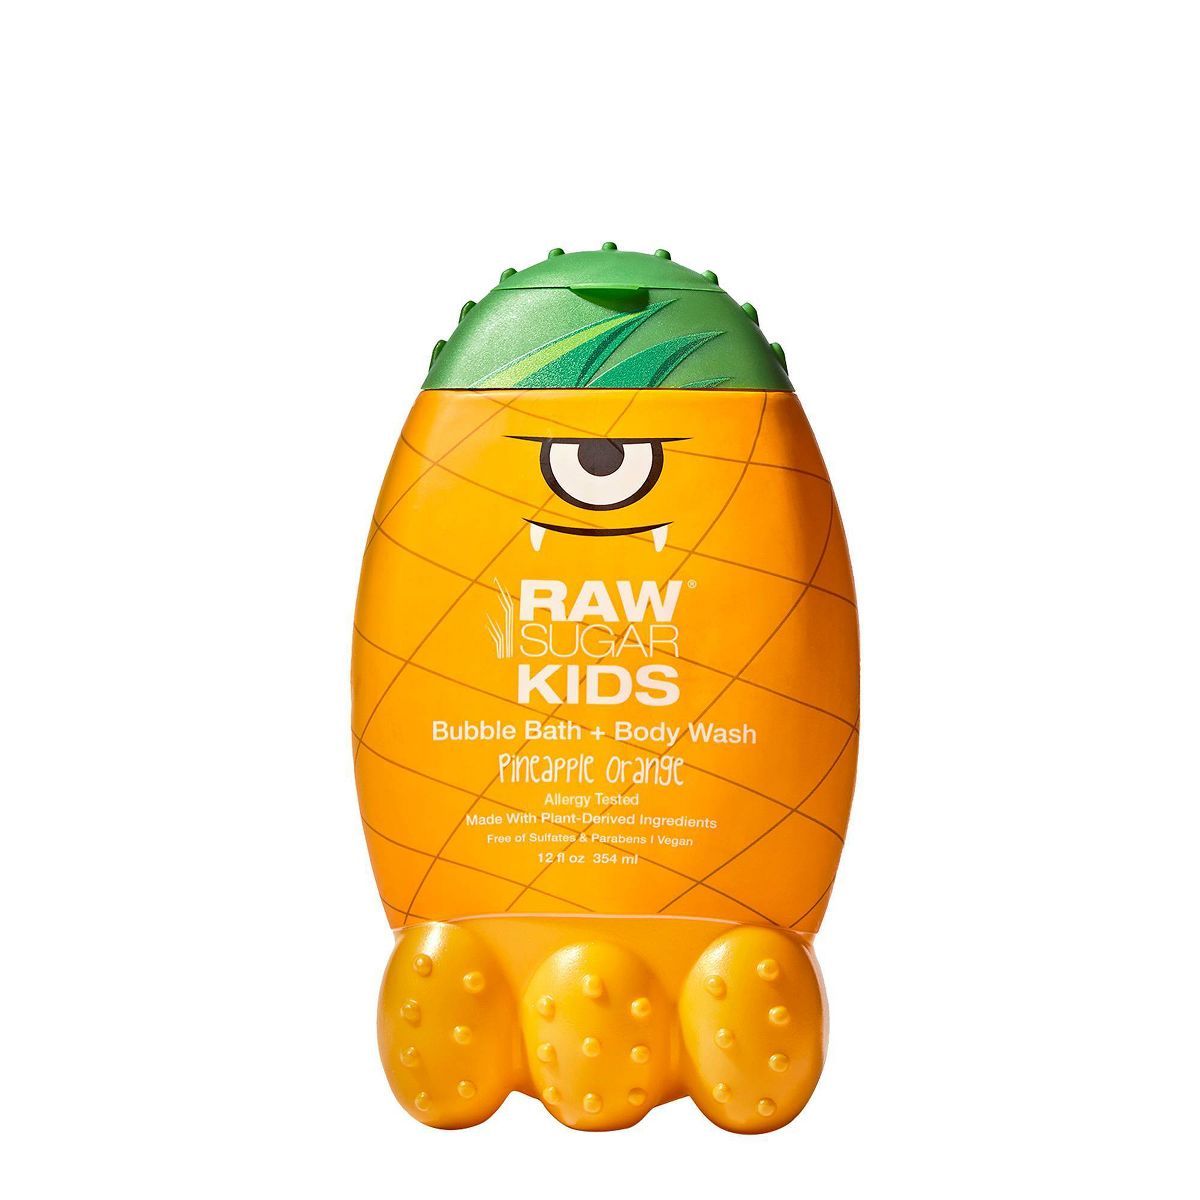 Raw Sugar Kids Bubble Bath + Body Wash Pineapple Orange - 12 fl oz | Target